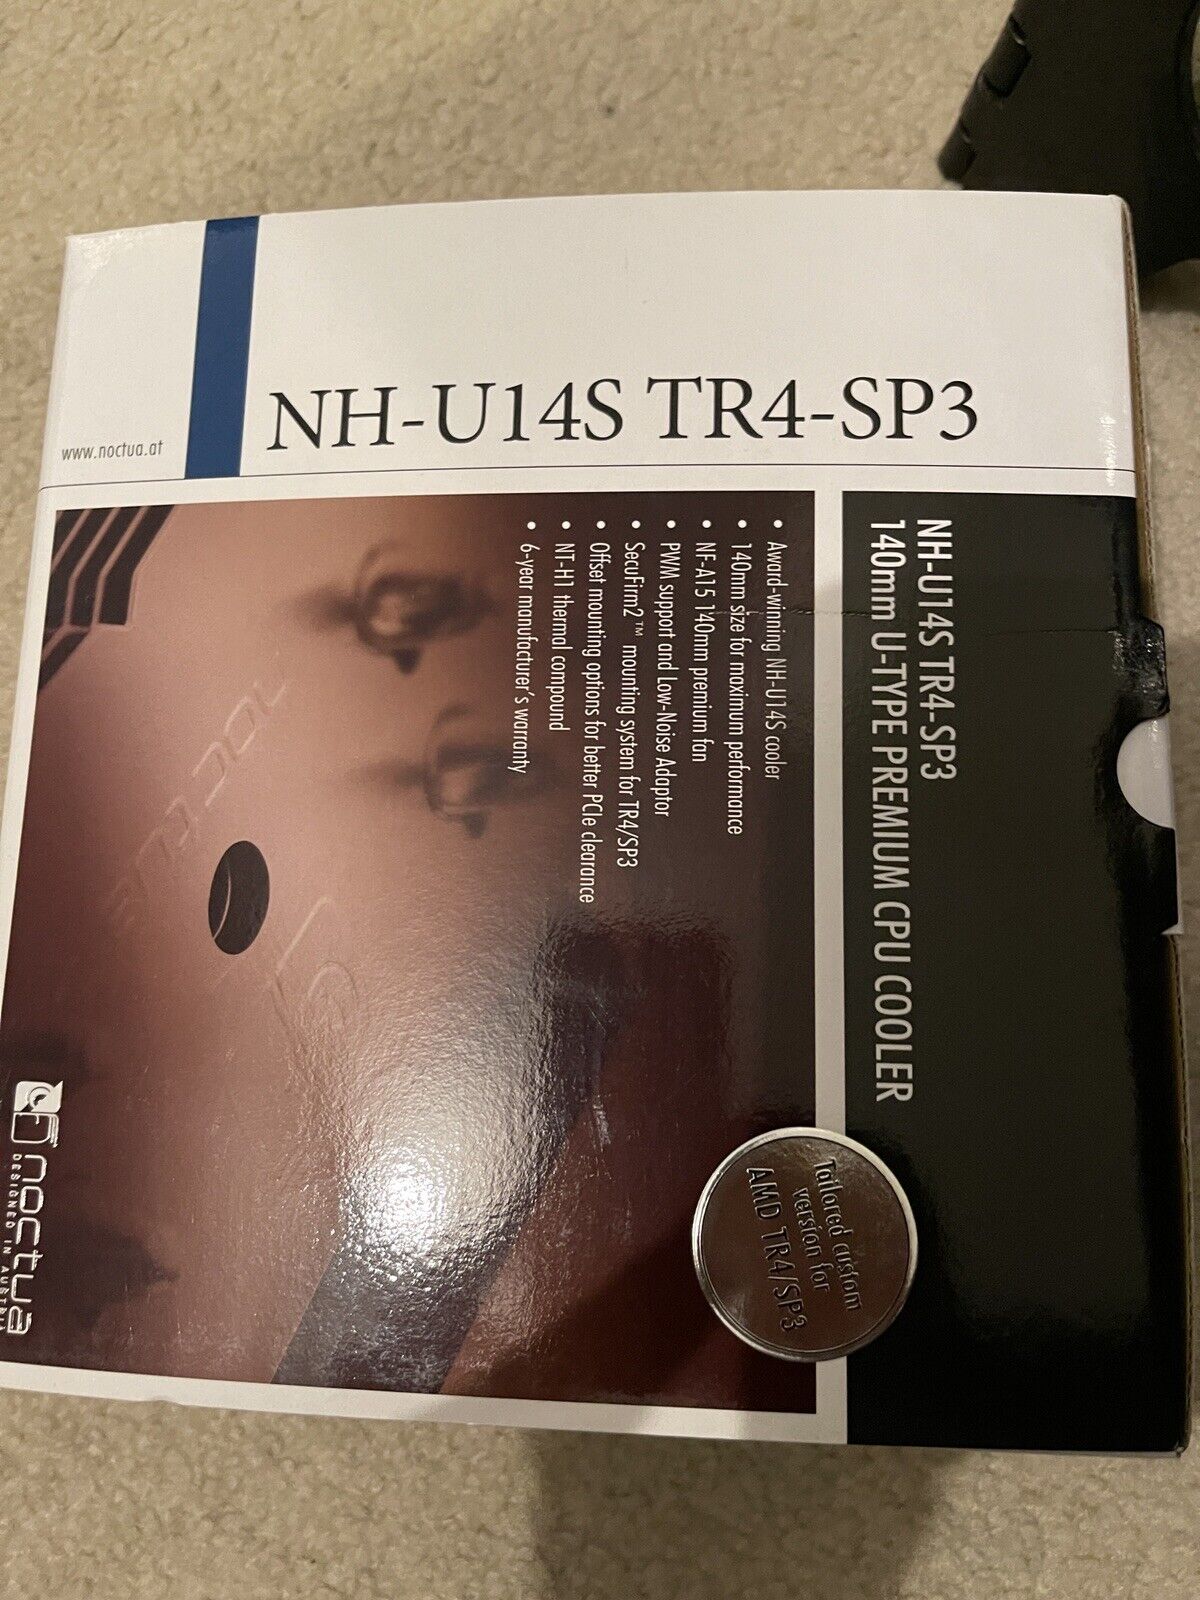 NH-U14S TR4-SP3, Premium-Grade CPU Cooler for AMD Strx4/Tr4/Sp3 (empty Box)